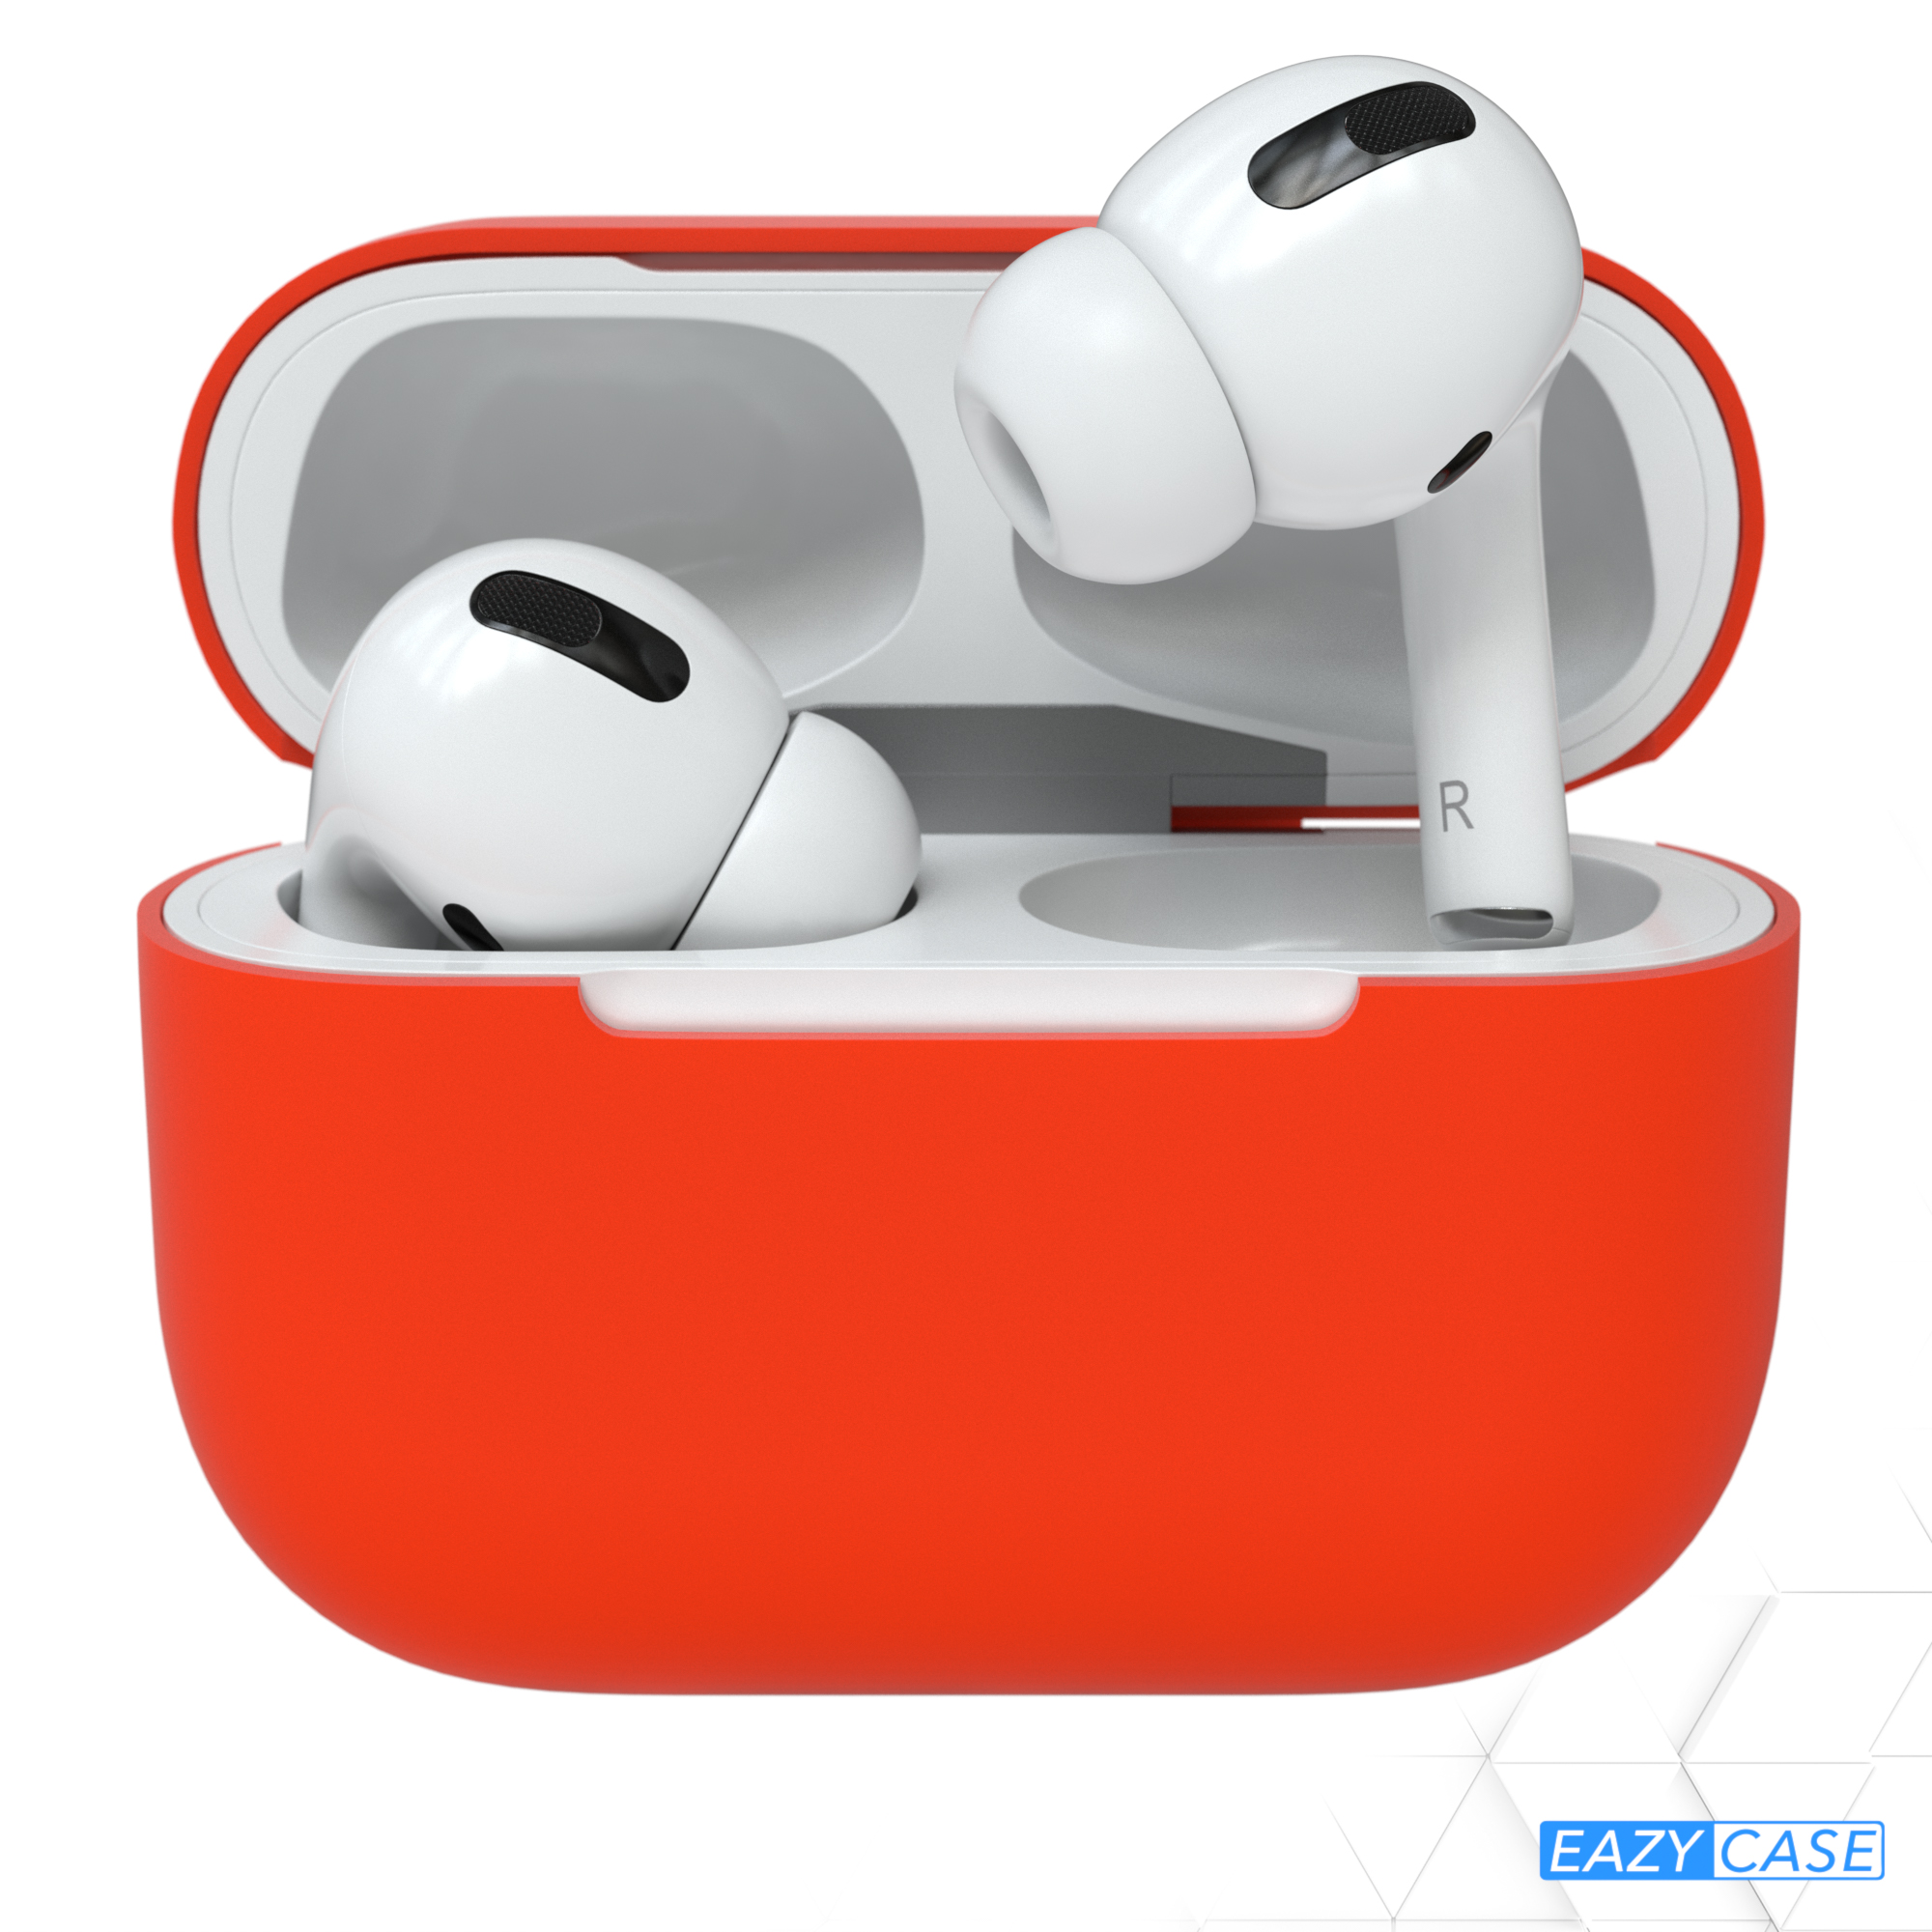 Sleeve Silikon Apple EAZY für: Schutzhülle CASE Rot passend Pro AirPods Case